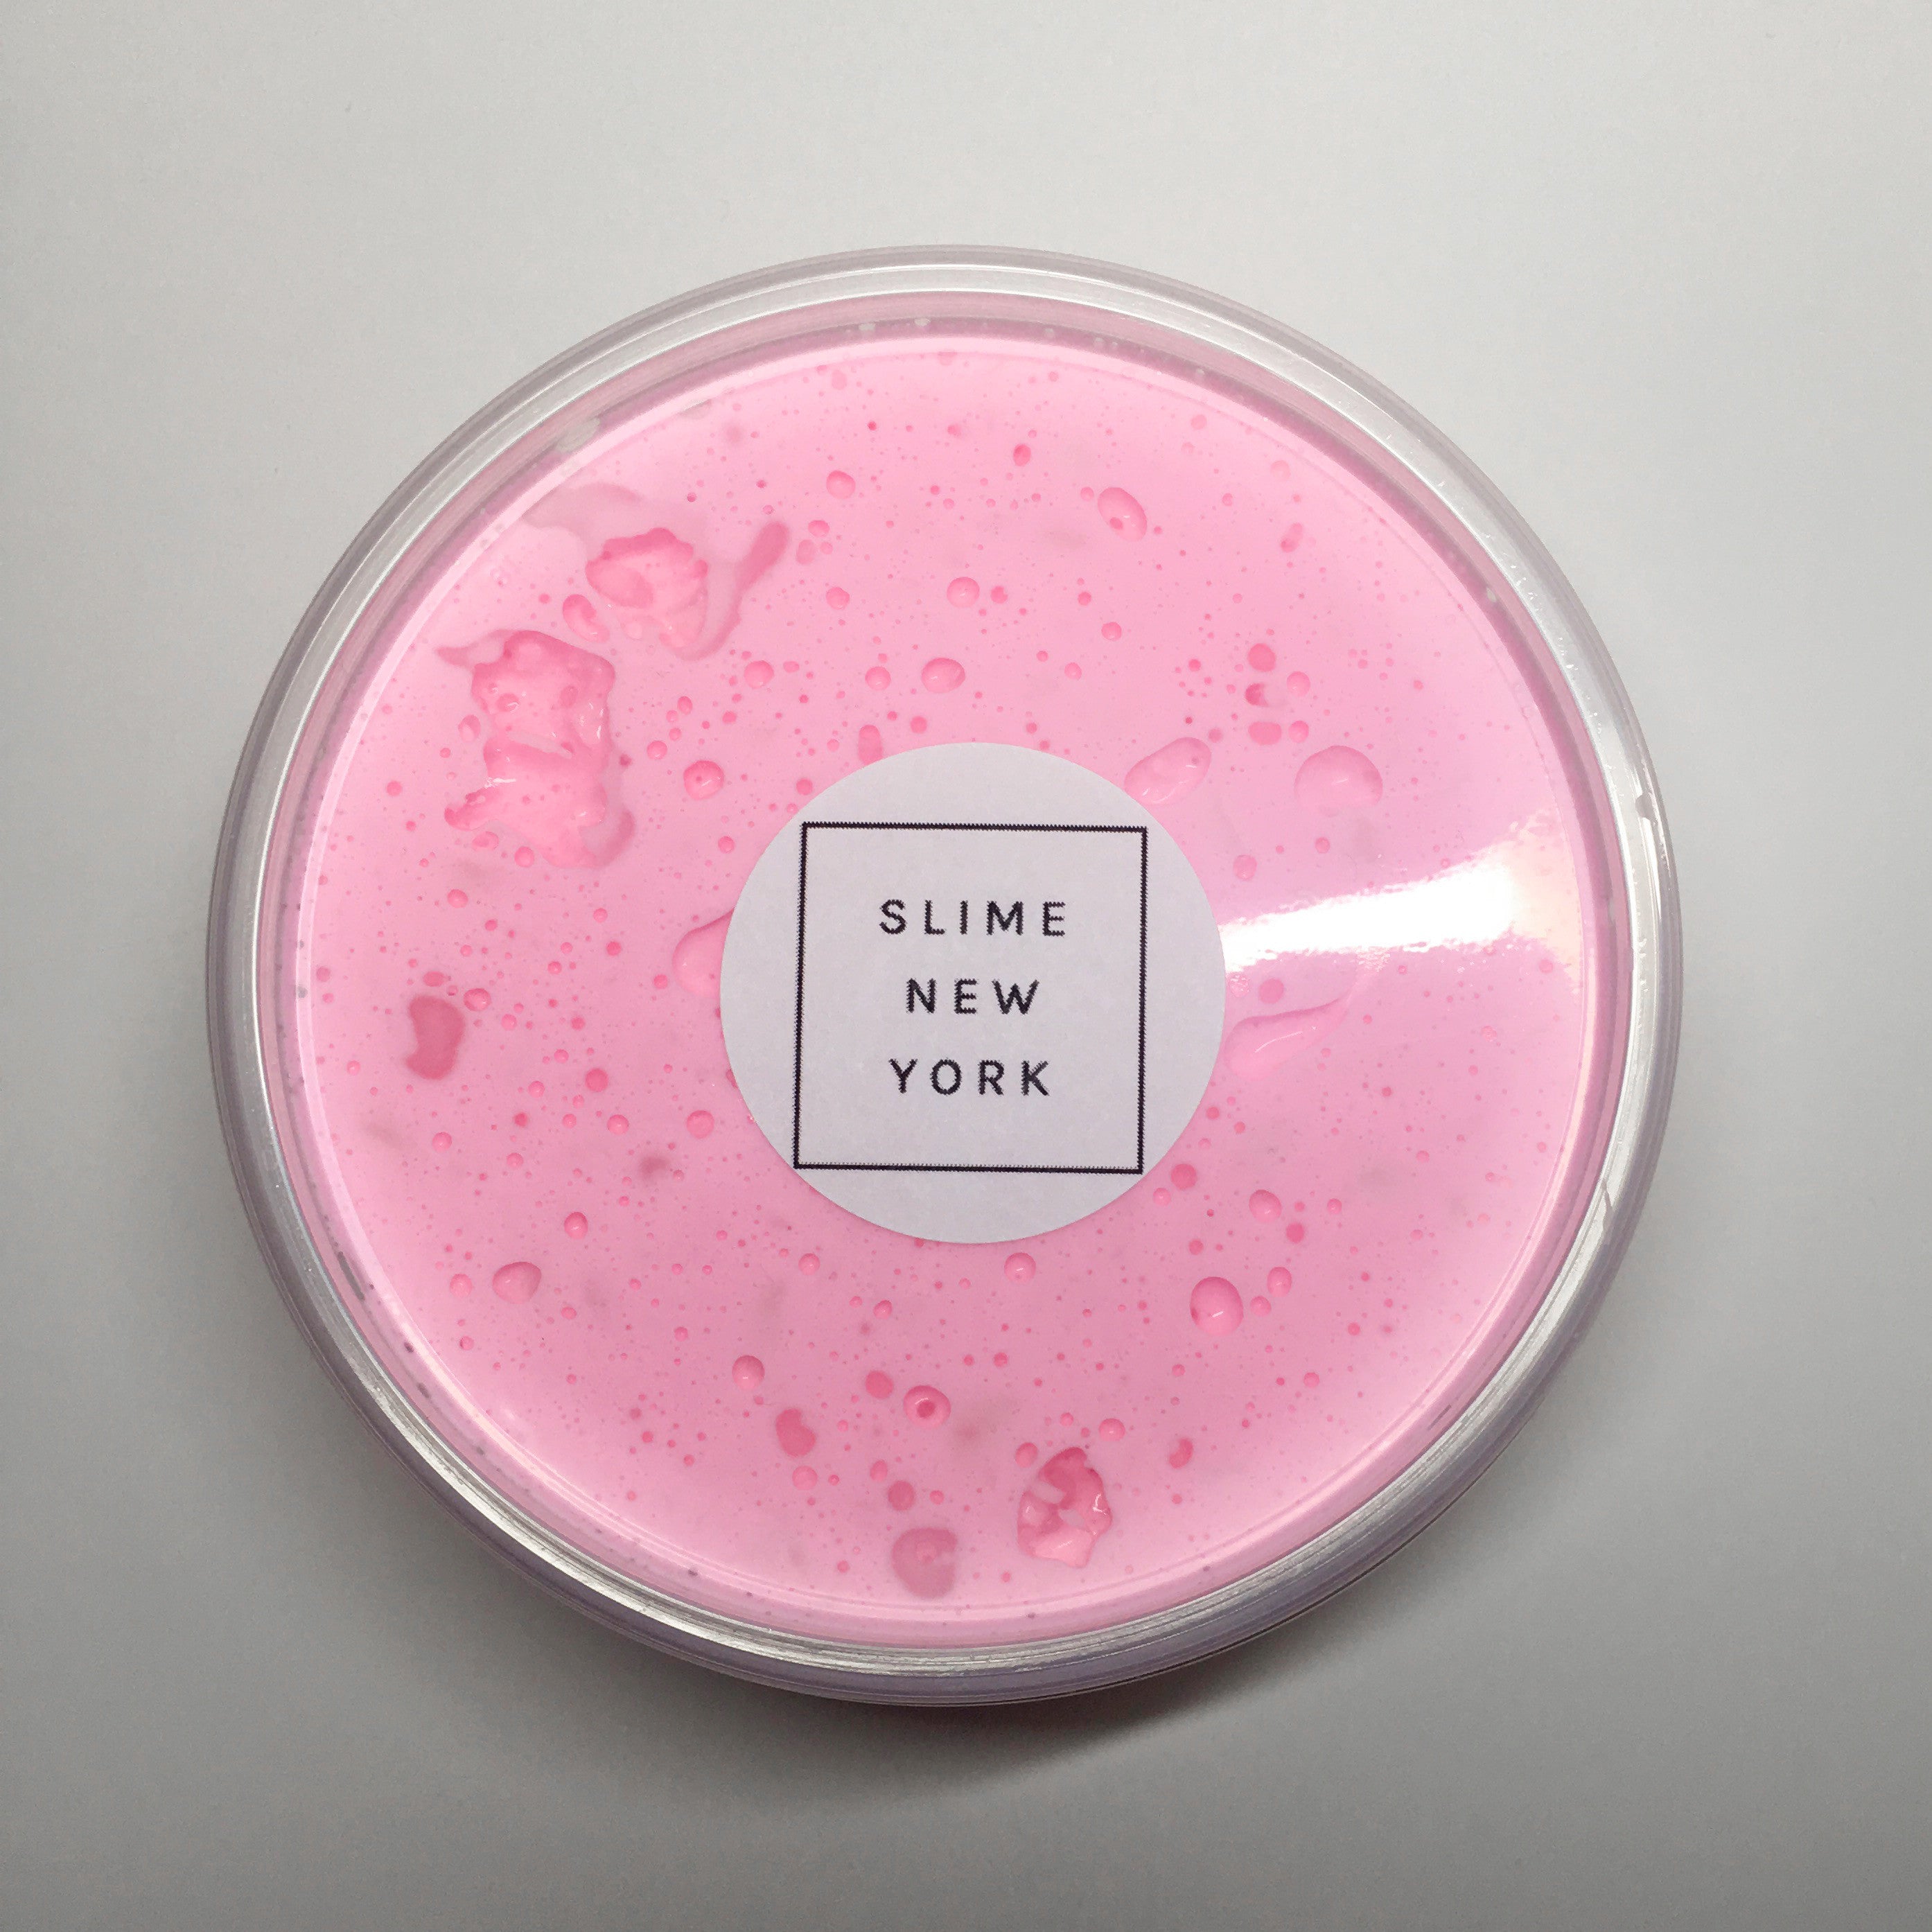 Chewed Up Pink Bubblegum - SLIME NEW YORK